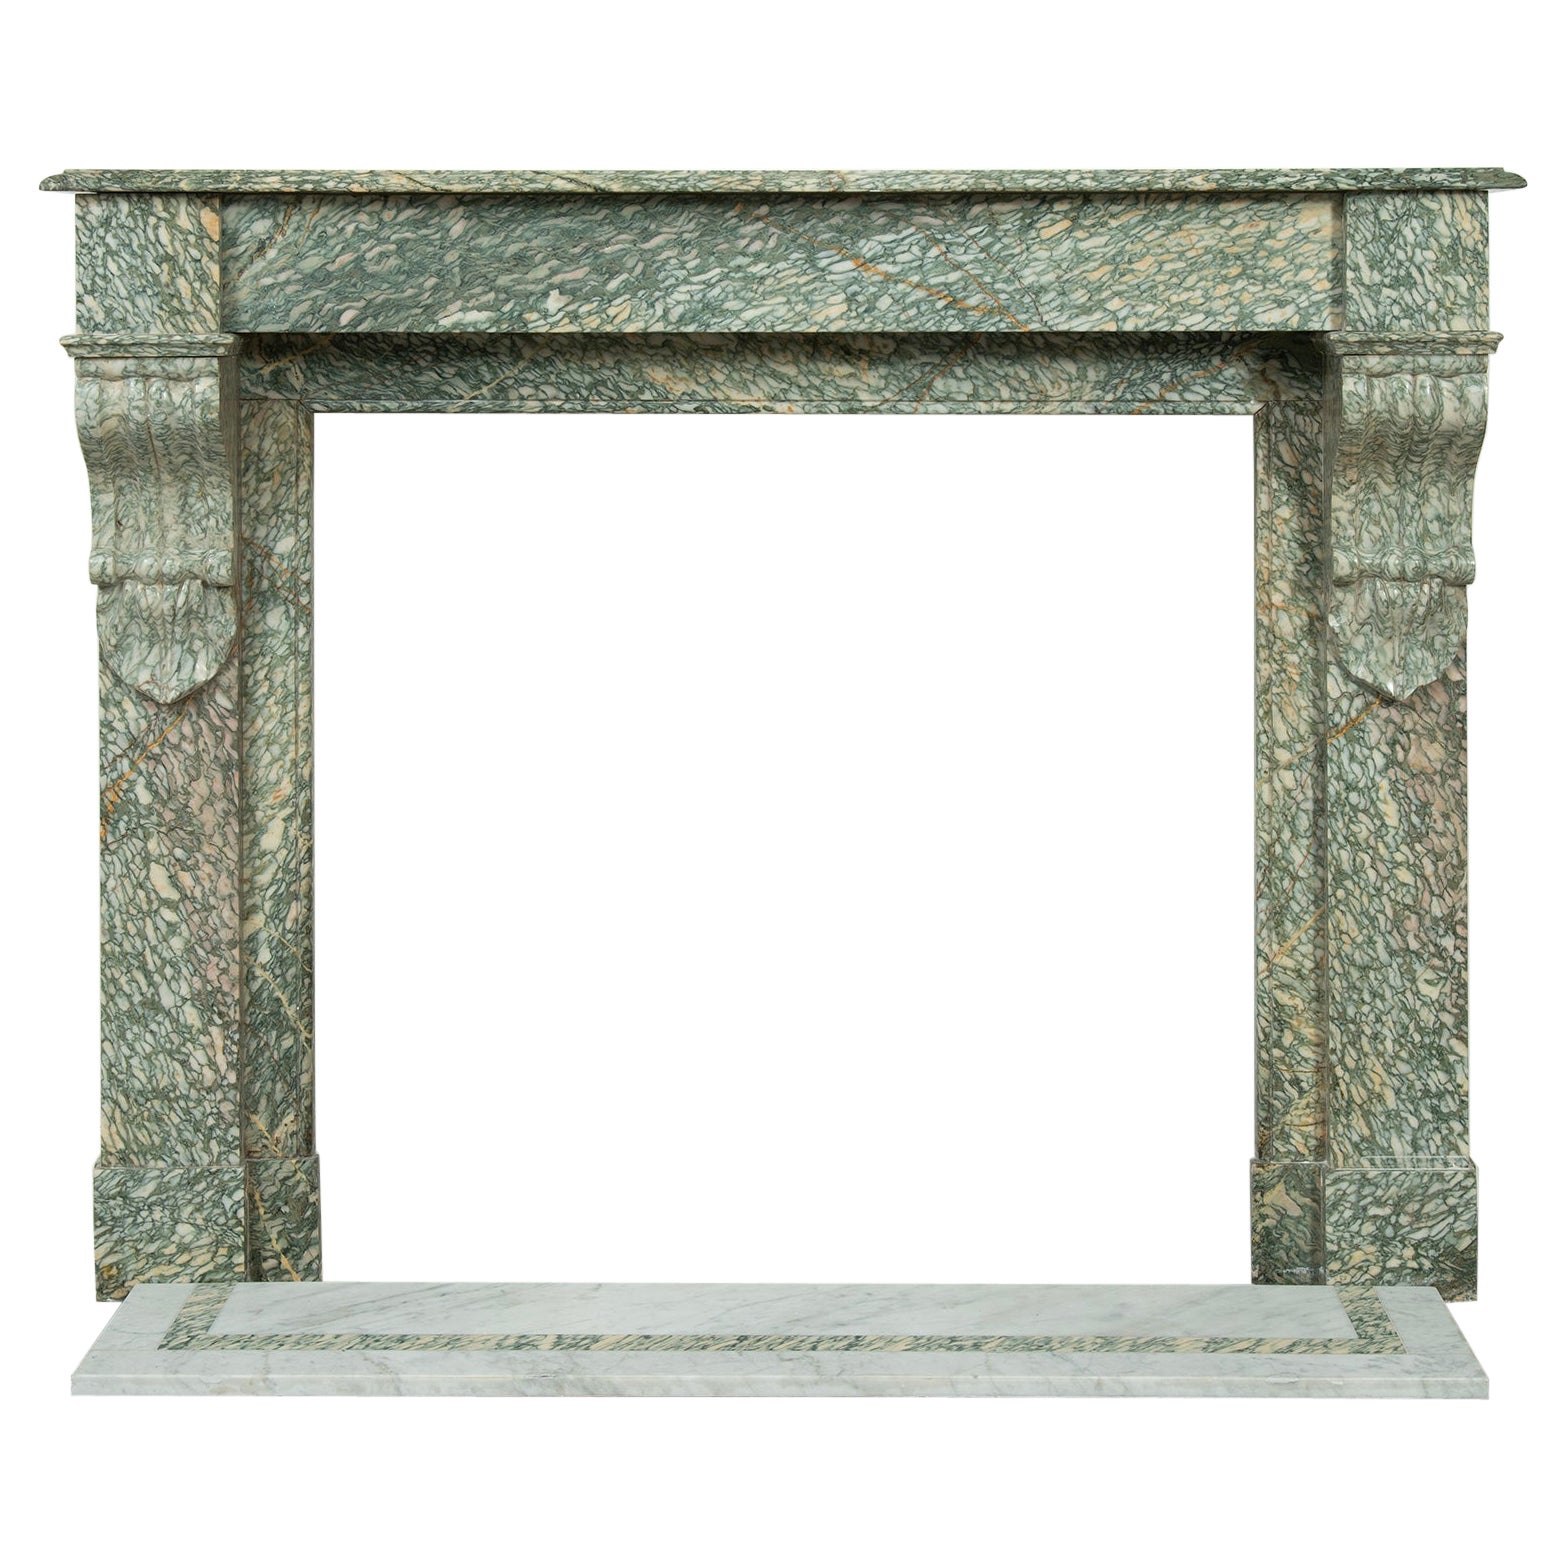 Fireplace Mantel in Vert D'estours Marble For Sale